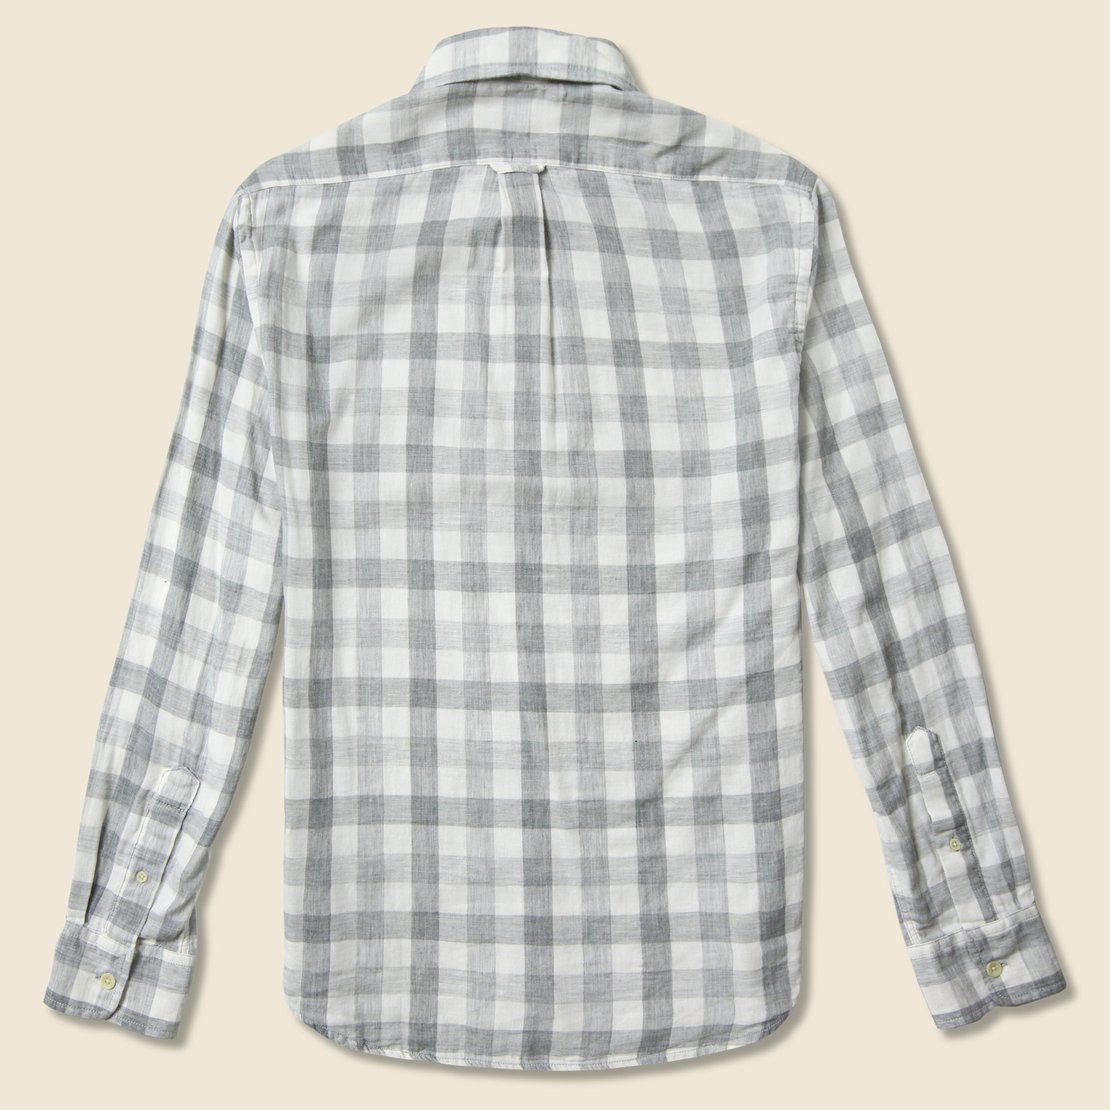 Durham Gingham Double Cloth Shirt - Heather Grey